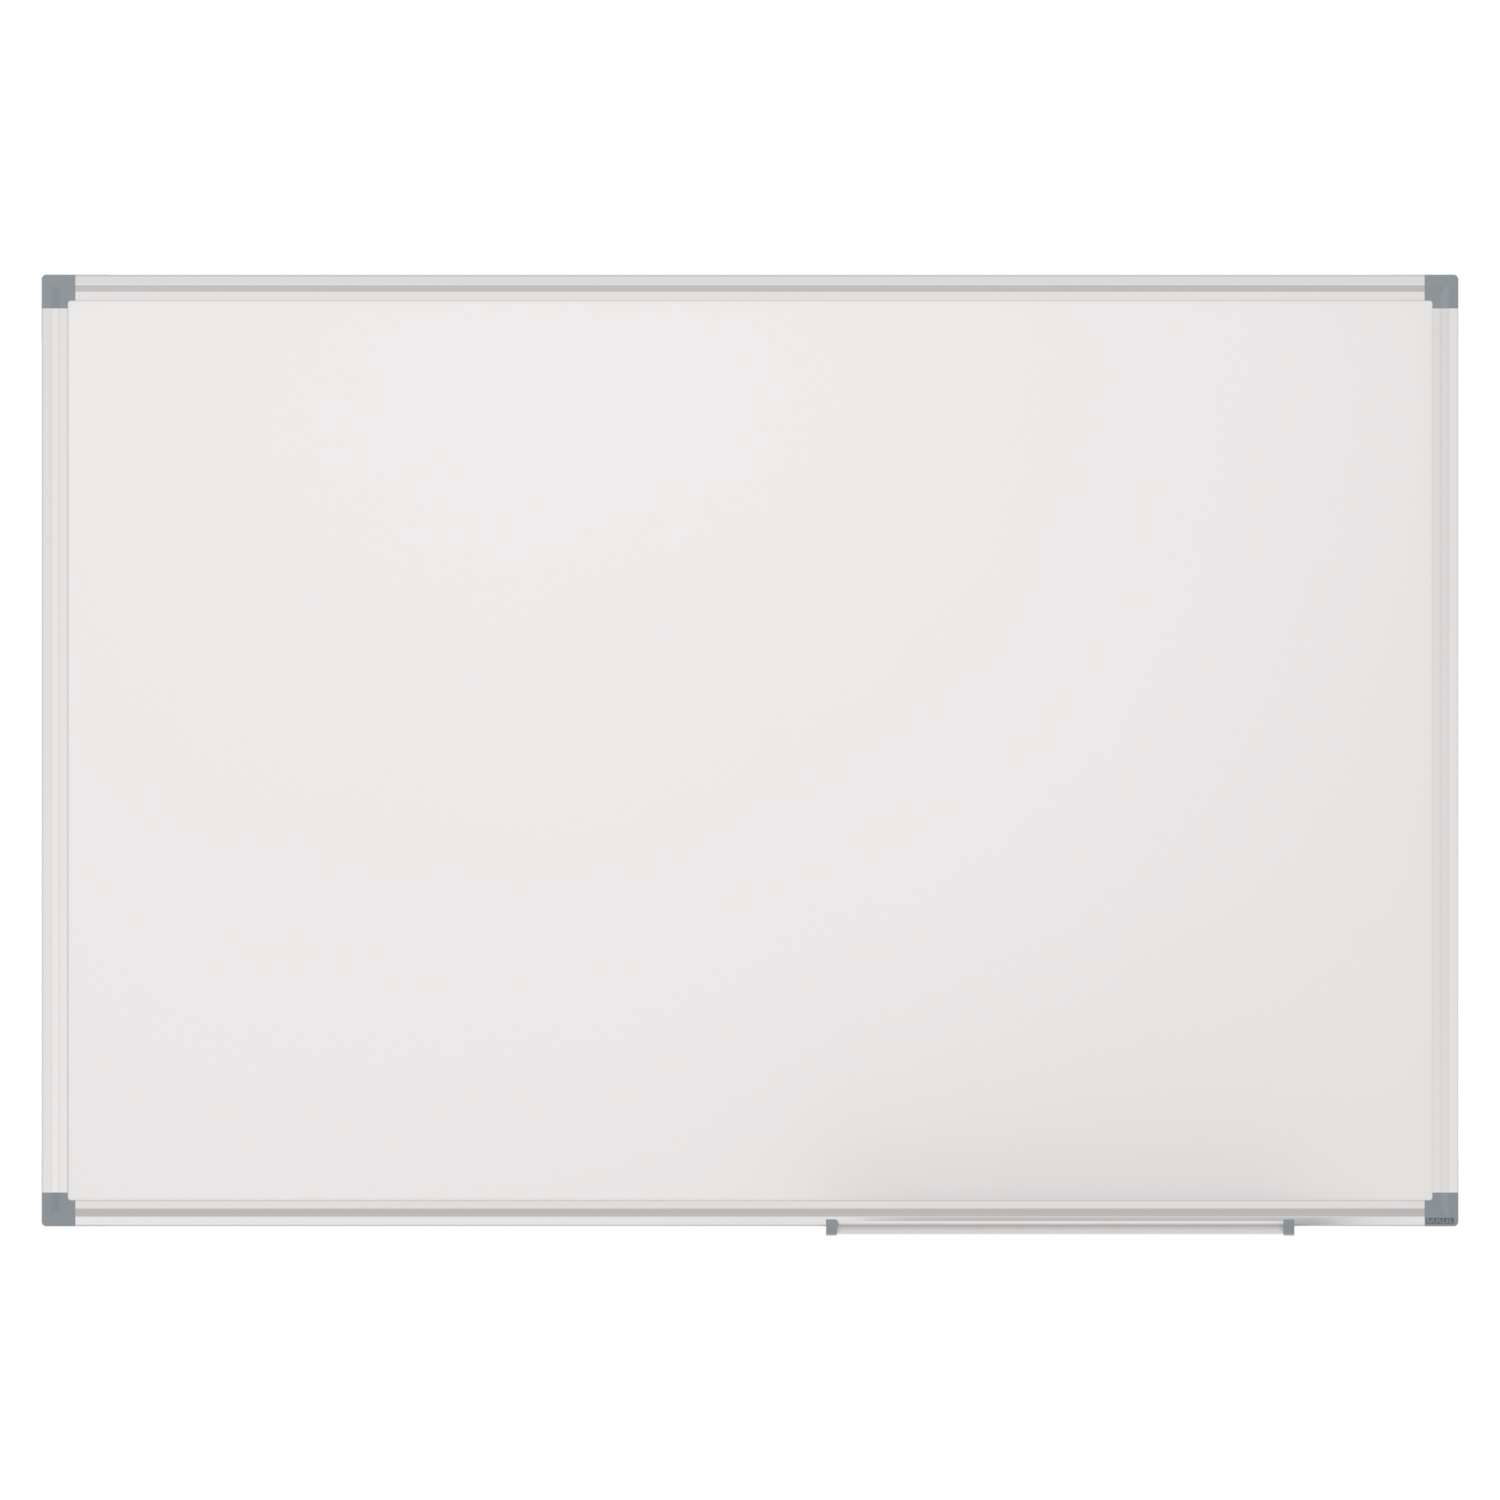 Whiteboard MAULstandard, 90x120 cm